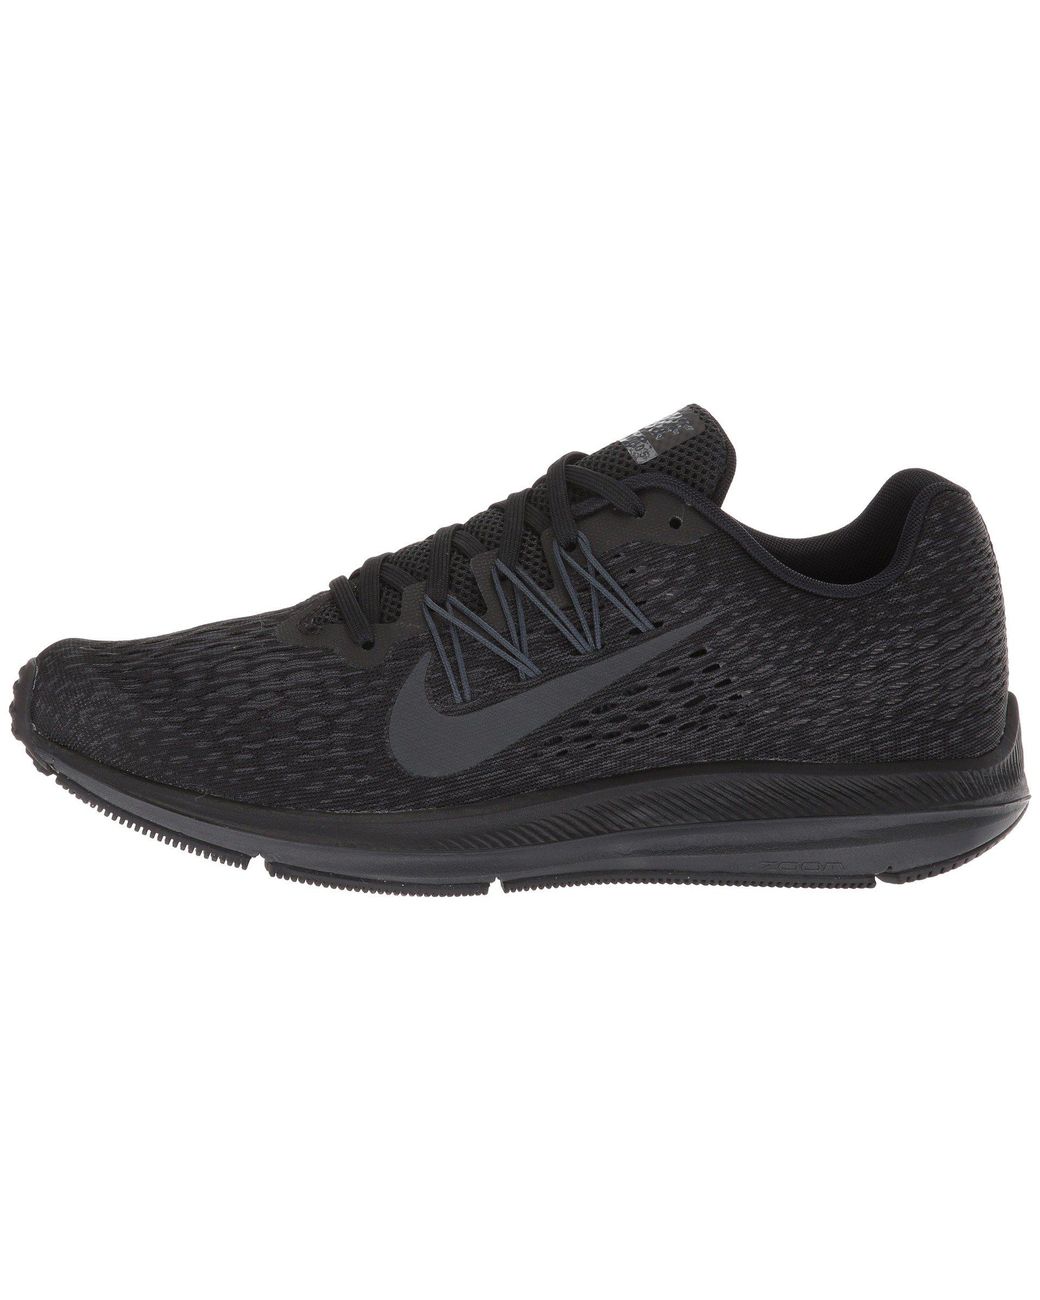 miseria cargando cortador Nike Women's Air Zoom Winflo 5 (black/anthracite) Running Shoes